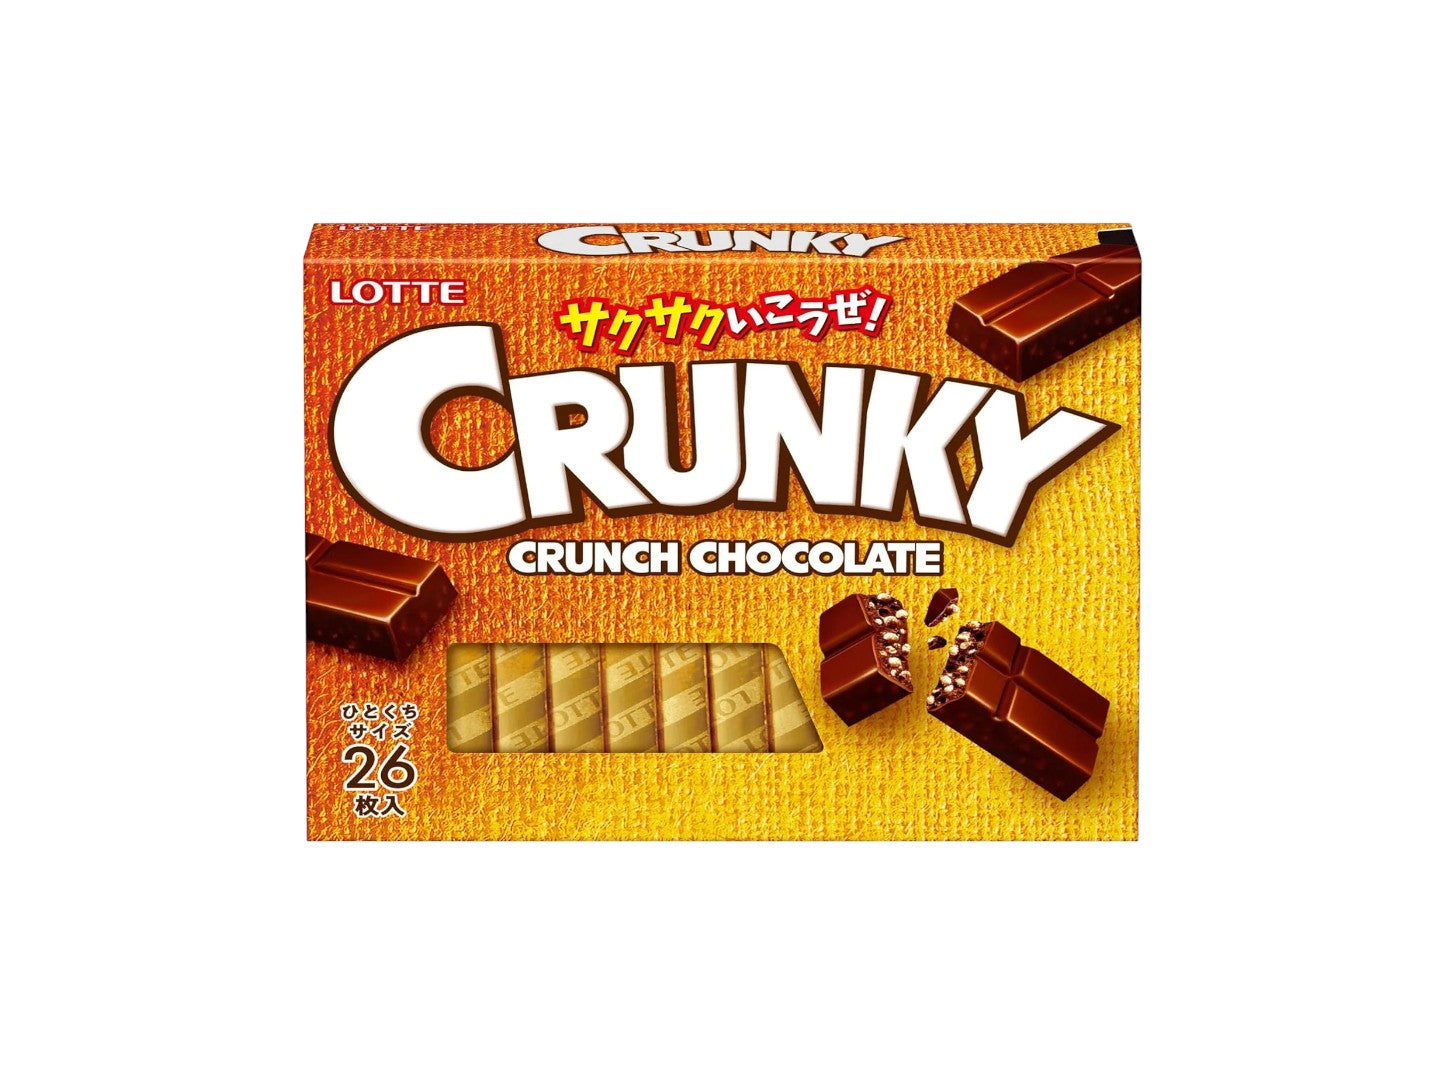 Lotte Crunky Crunch Chocolate (Japan)